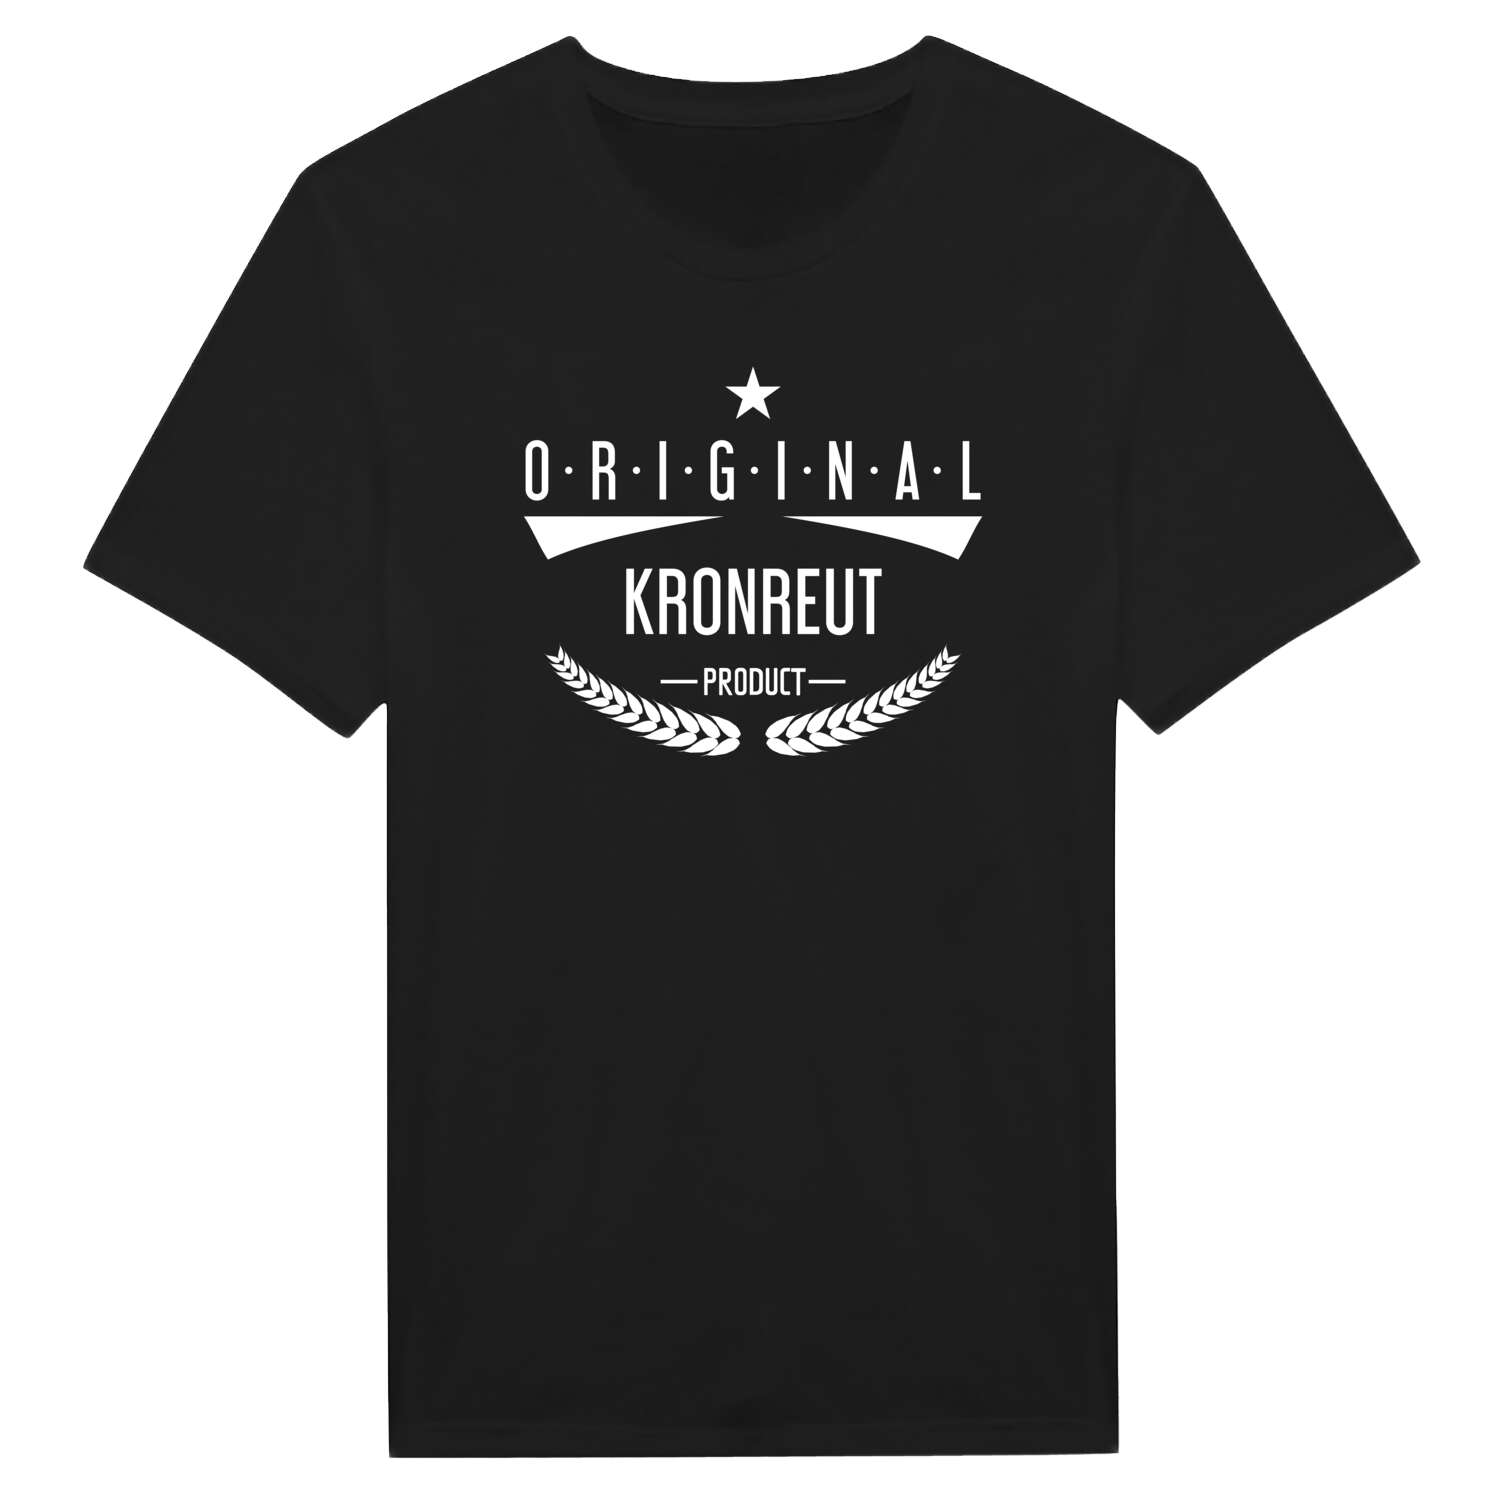 Kronreut T-Shirt »Original Product«